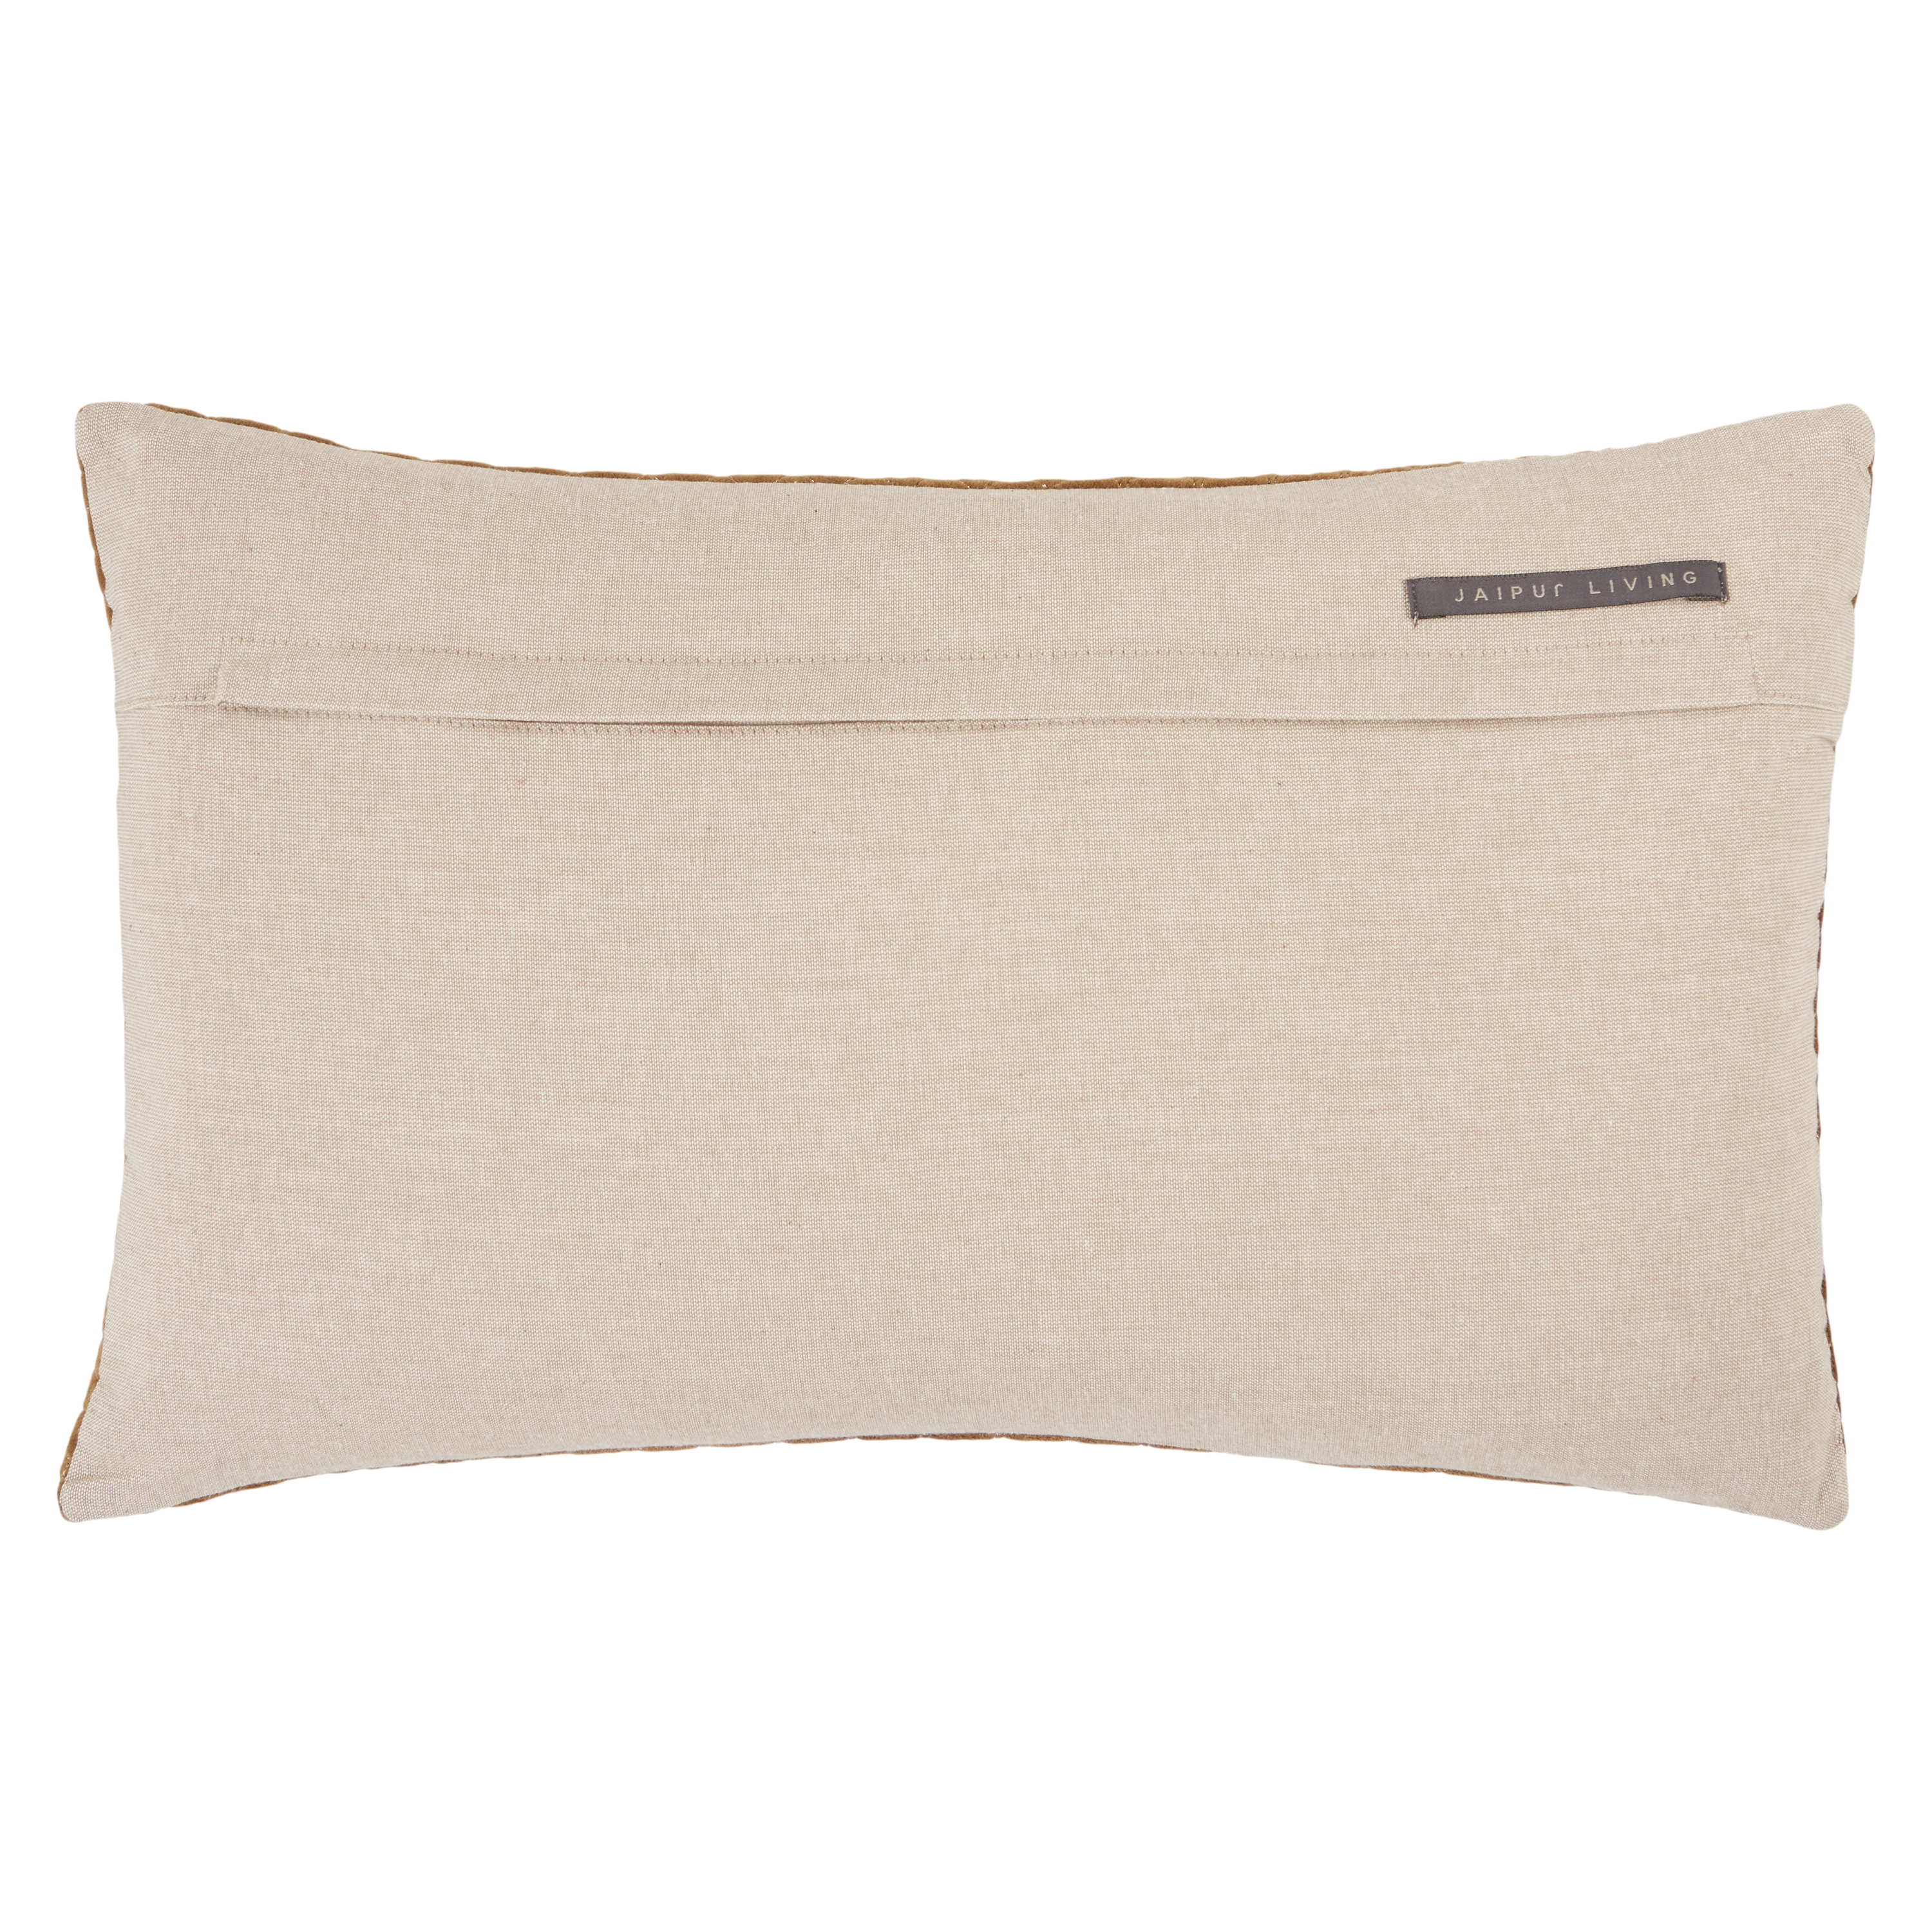 Design (US) Brown 13"X21" Pillow - Image 1